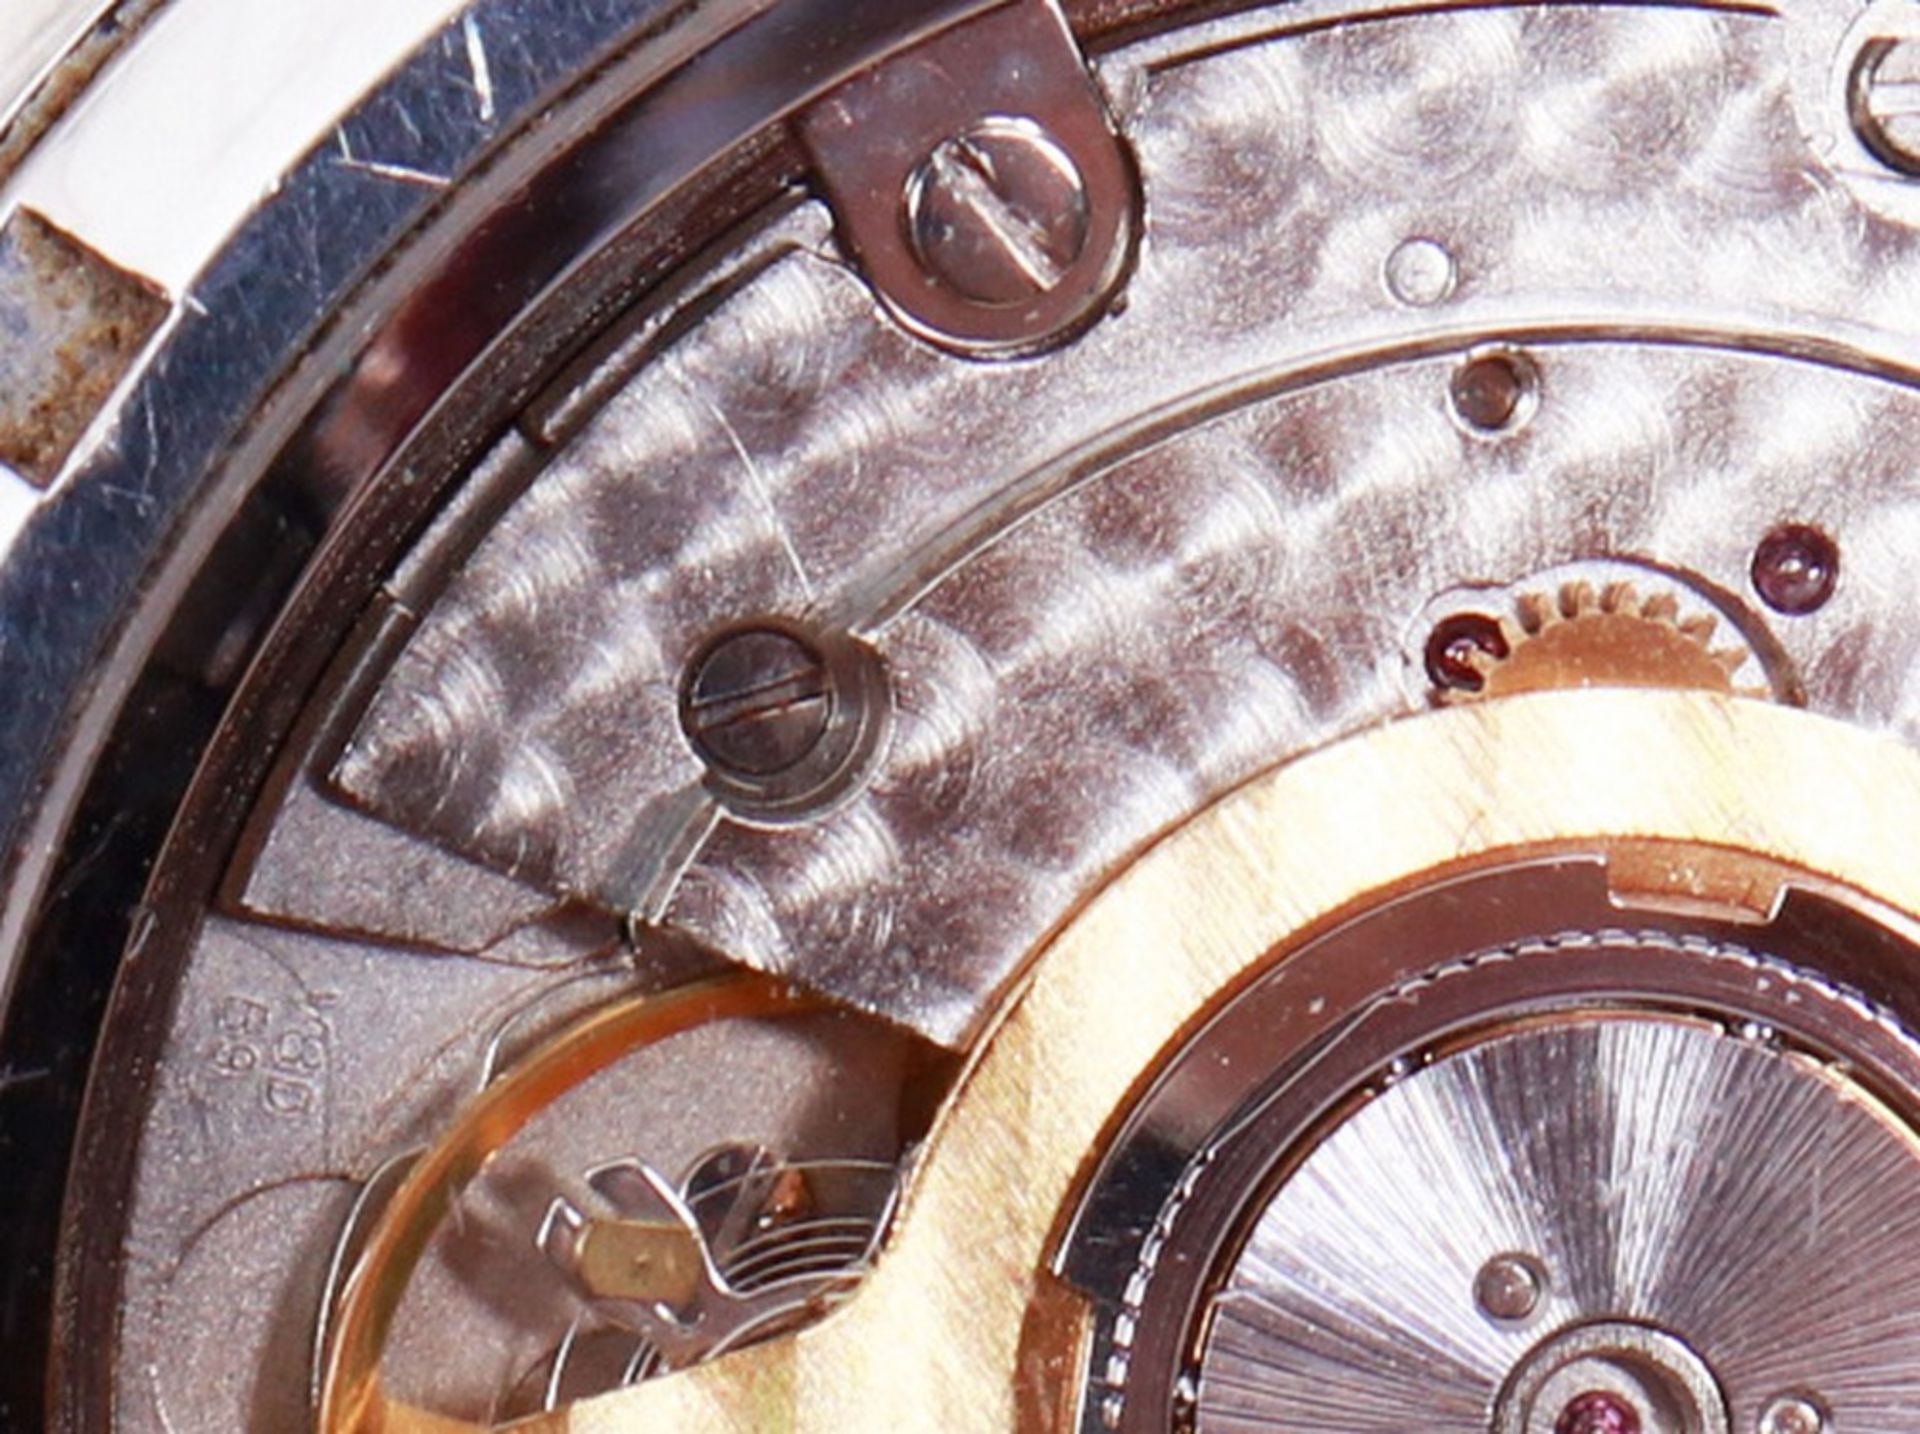 Men's wristwatch, Chronoswiss, model "Pacific 100m", 1990s - Image 9 of 13